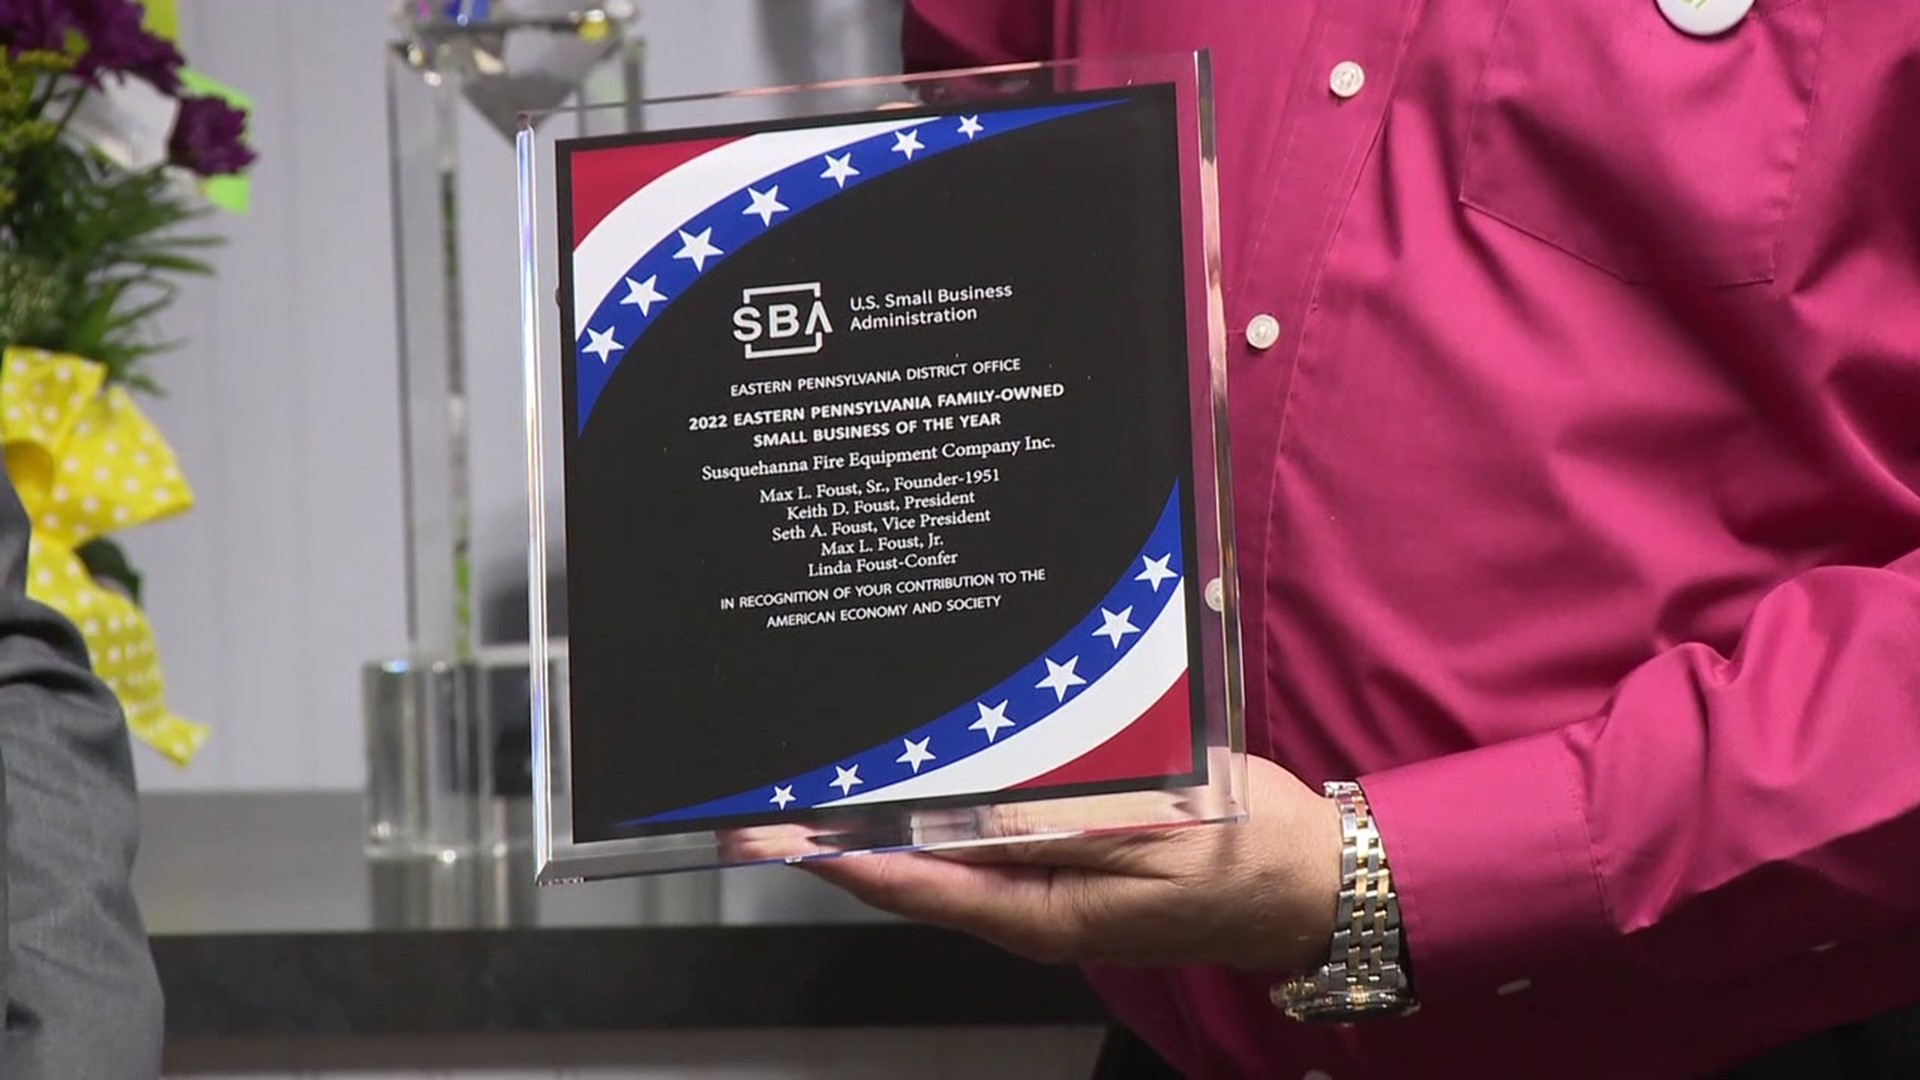 Newswatch 16's Nikki Krize shows how Susquehanna Fire Equipment Company earned the award.